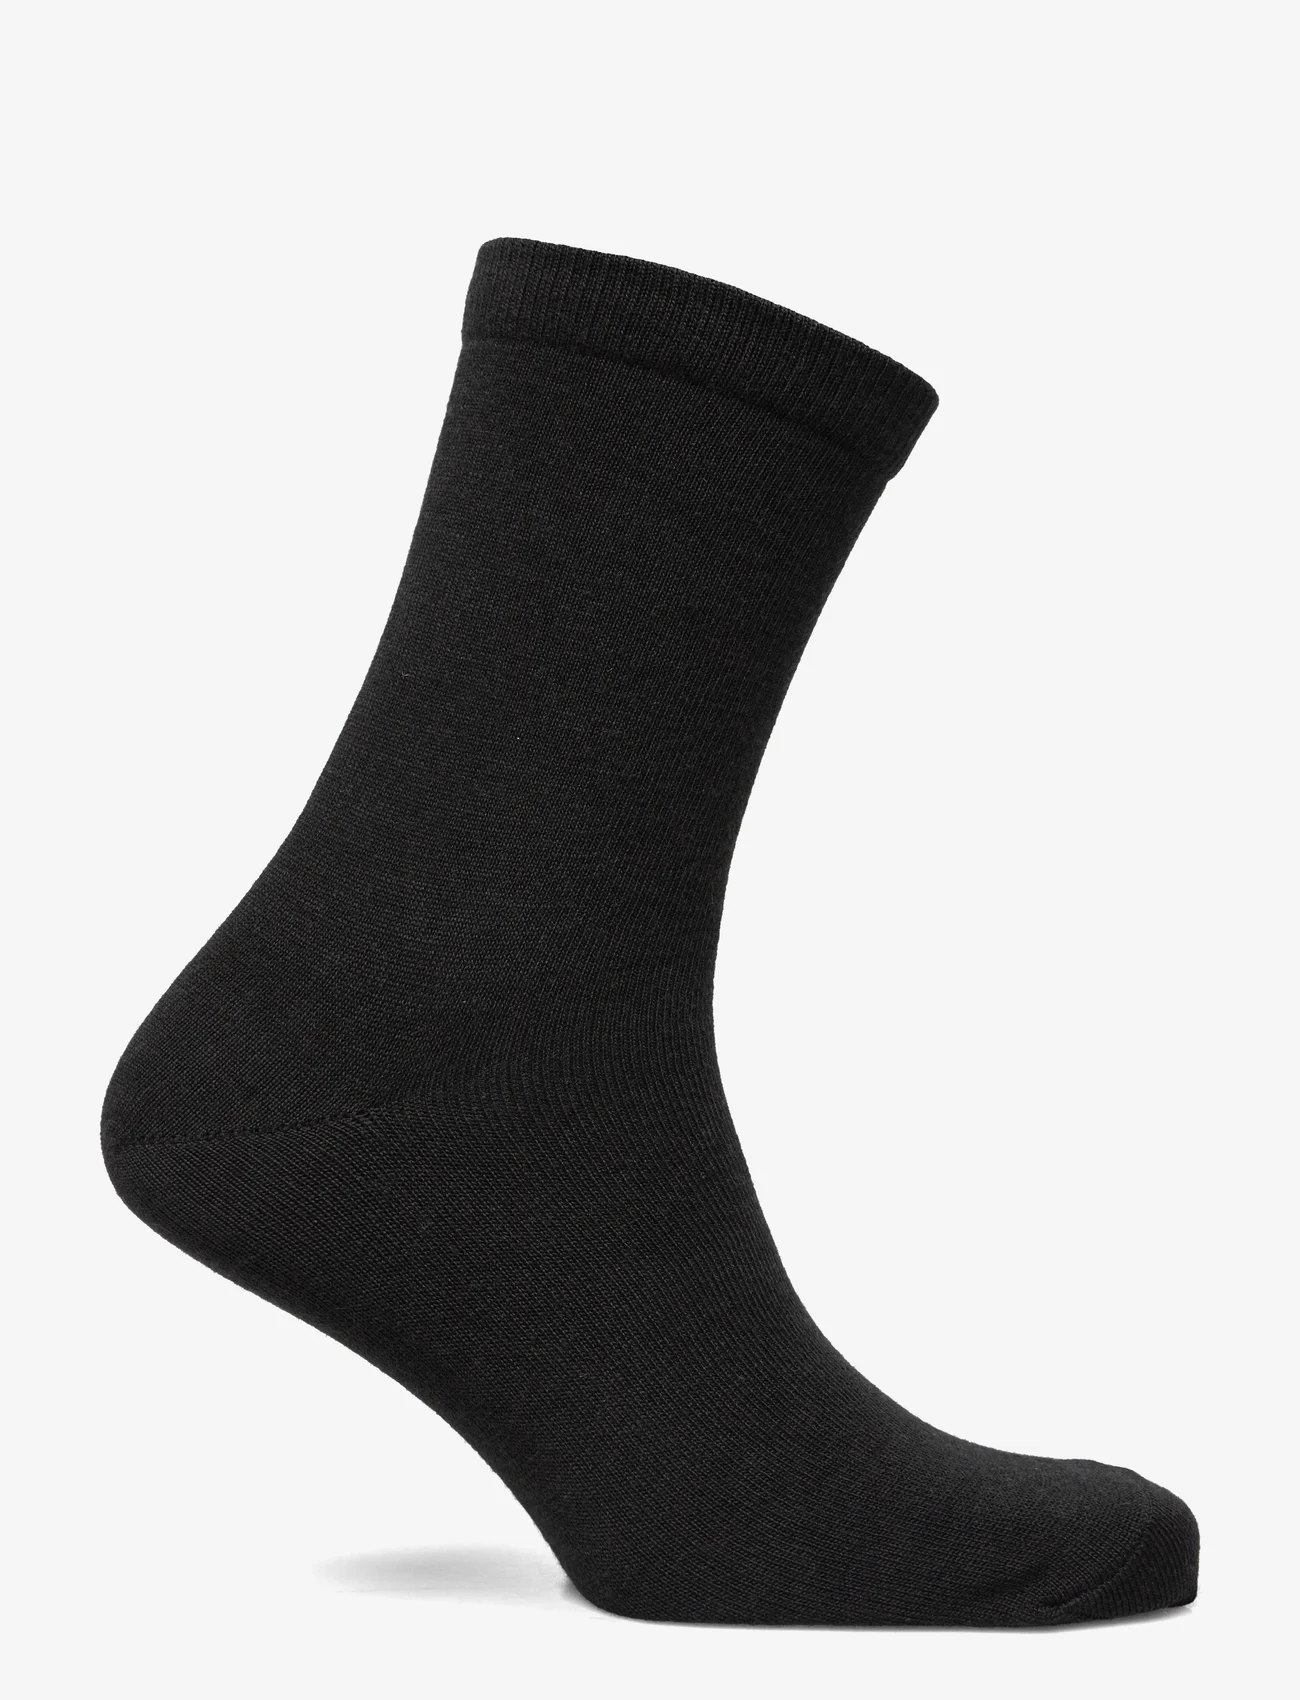 mp Denmark - Wool/cotton socks - lowest prices - black - 1